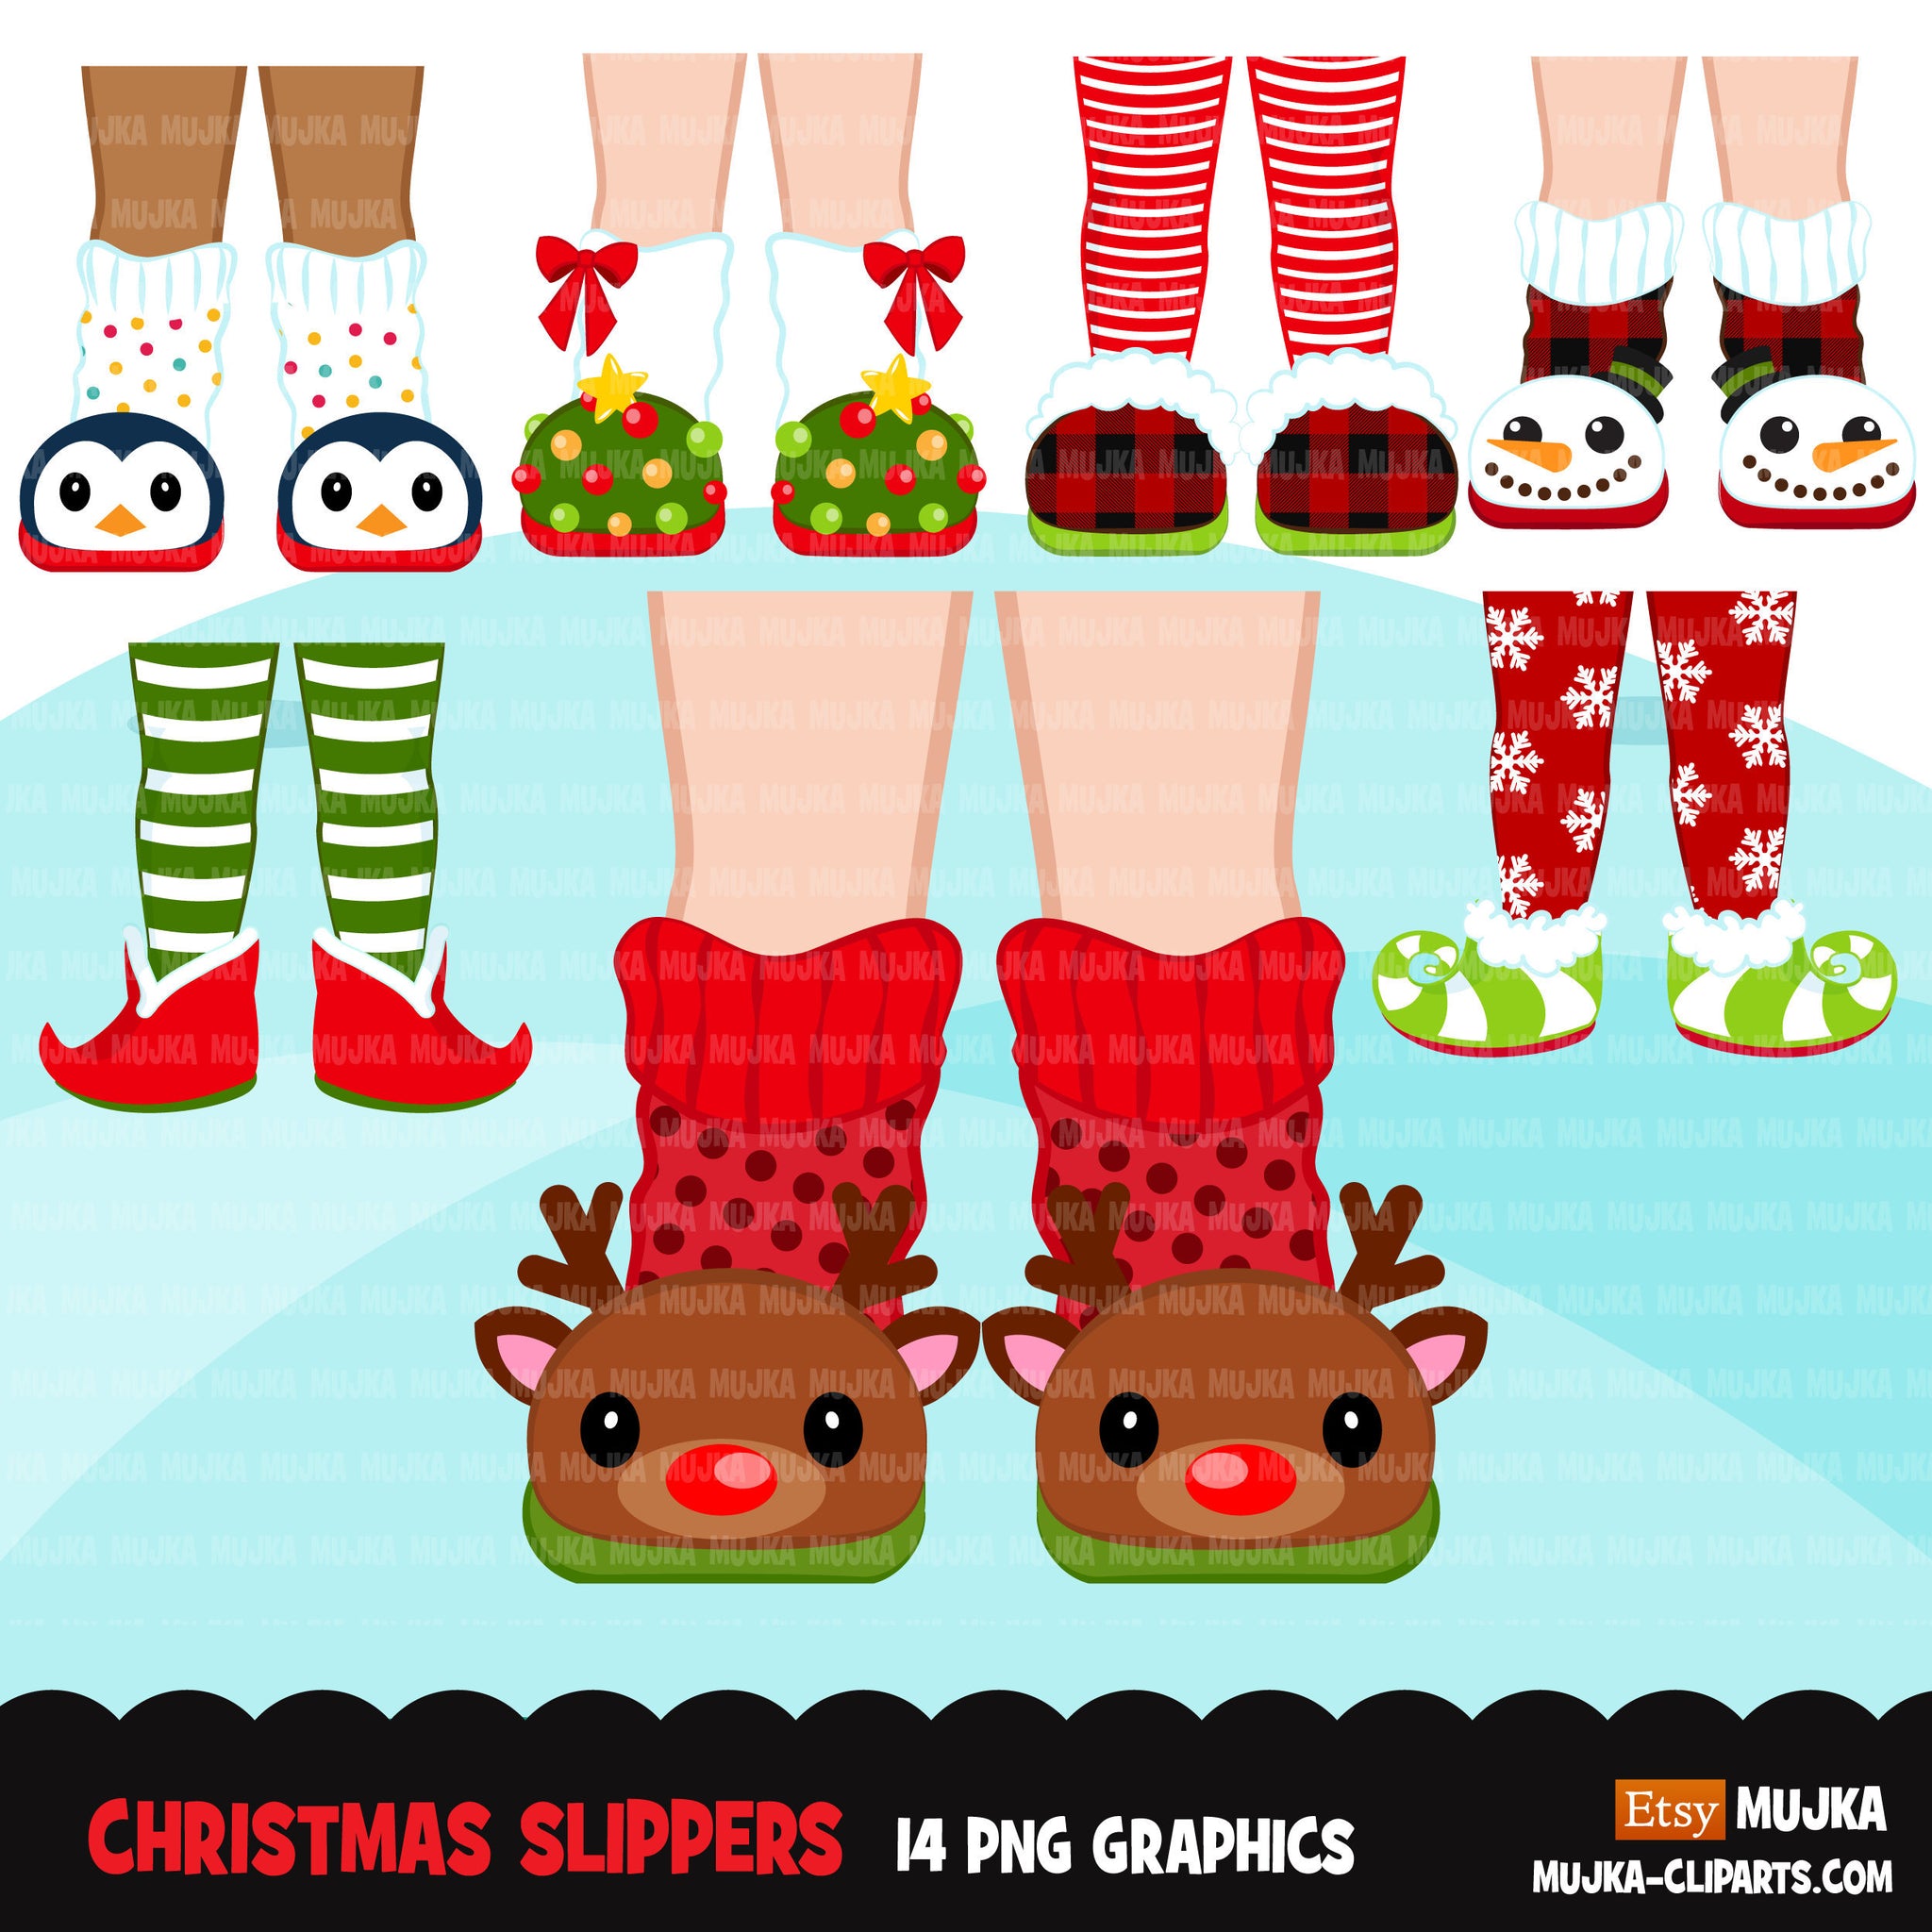 Christmas slippers clipart, Christmas graphics, woolly socks, elf slip –  MUJKA CLIPARTS